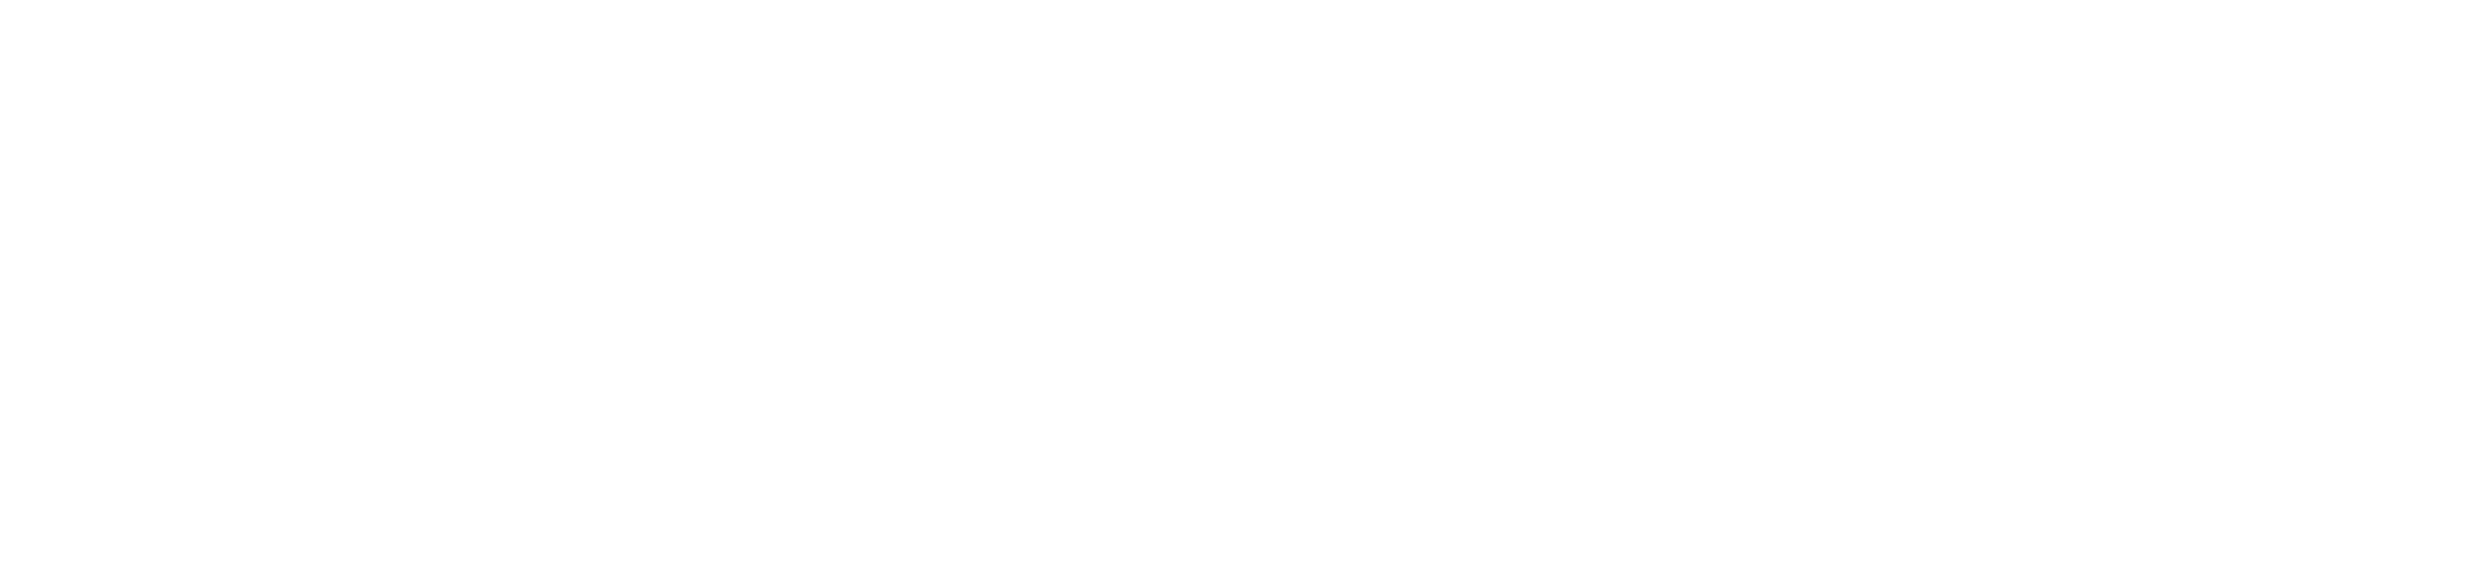 qod labs - full white logo